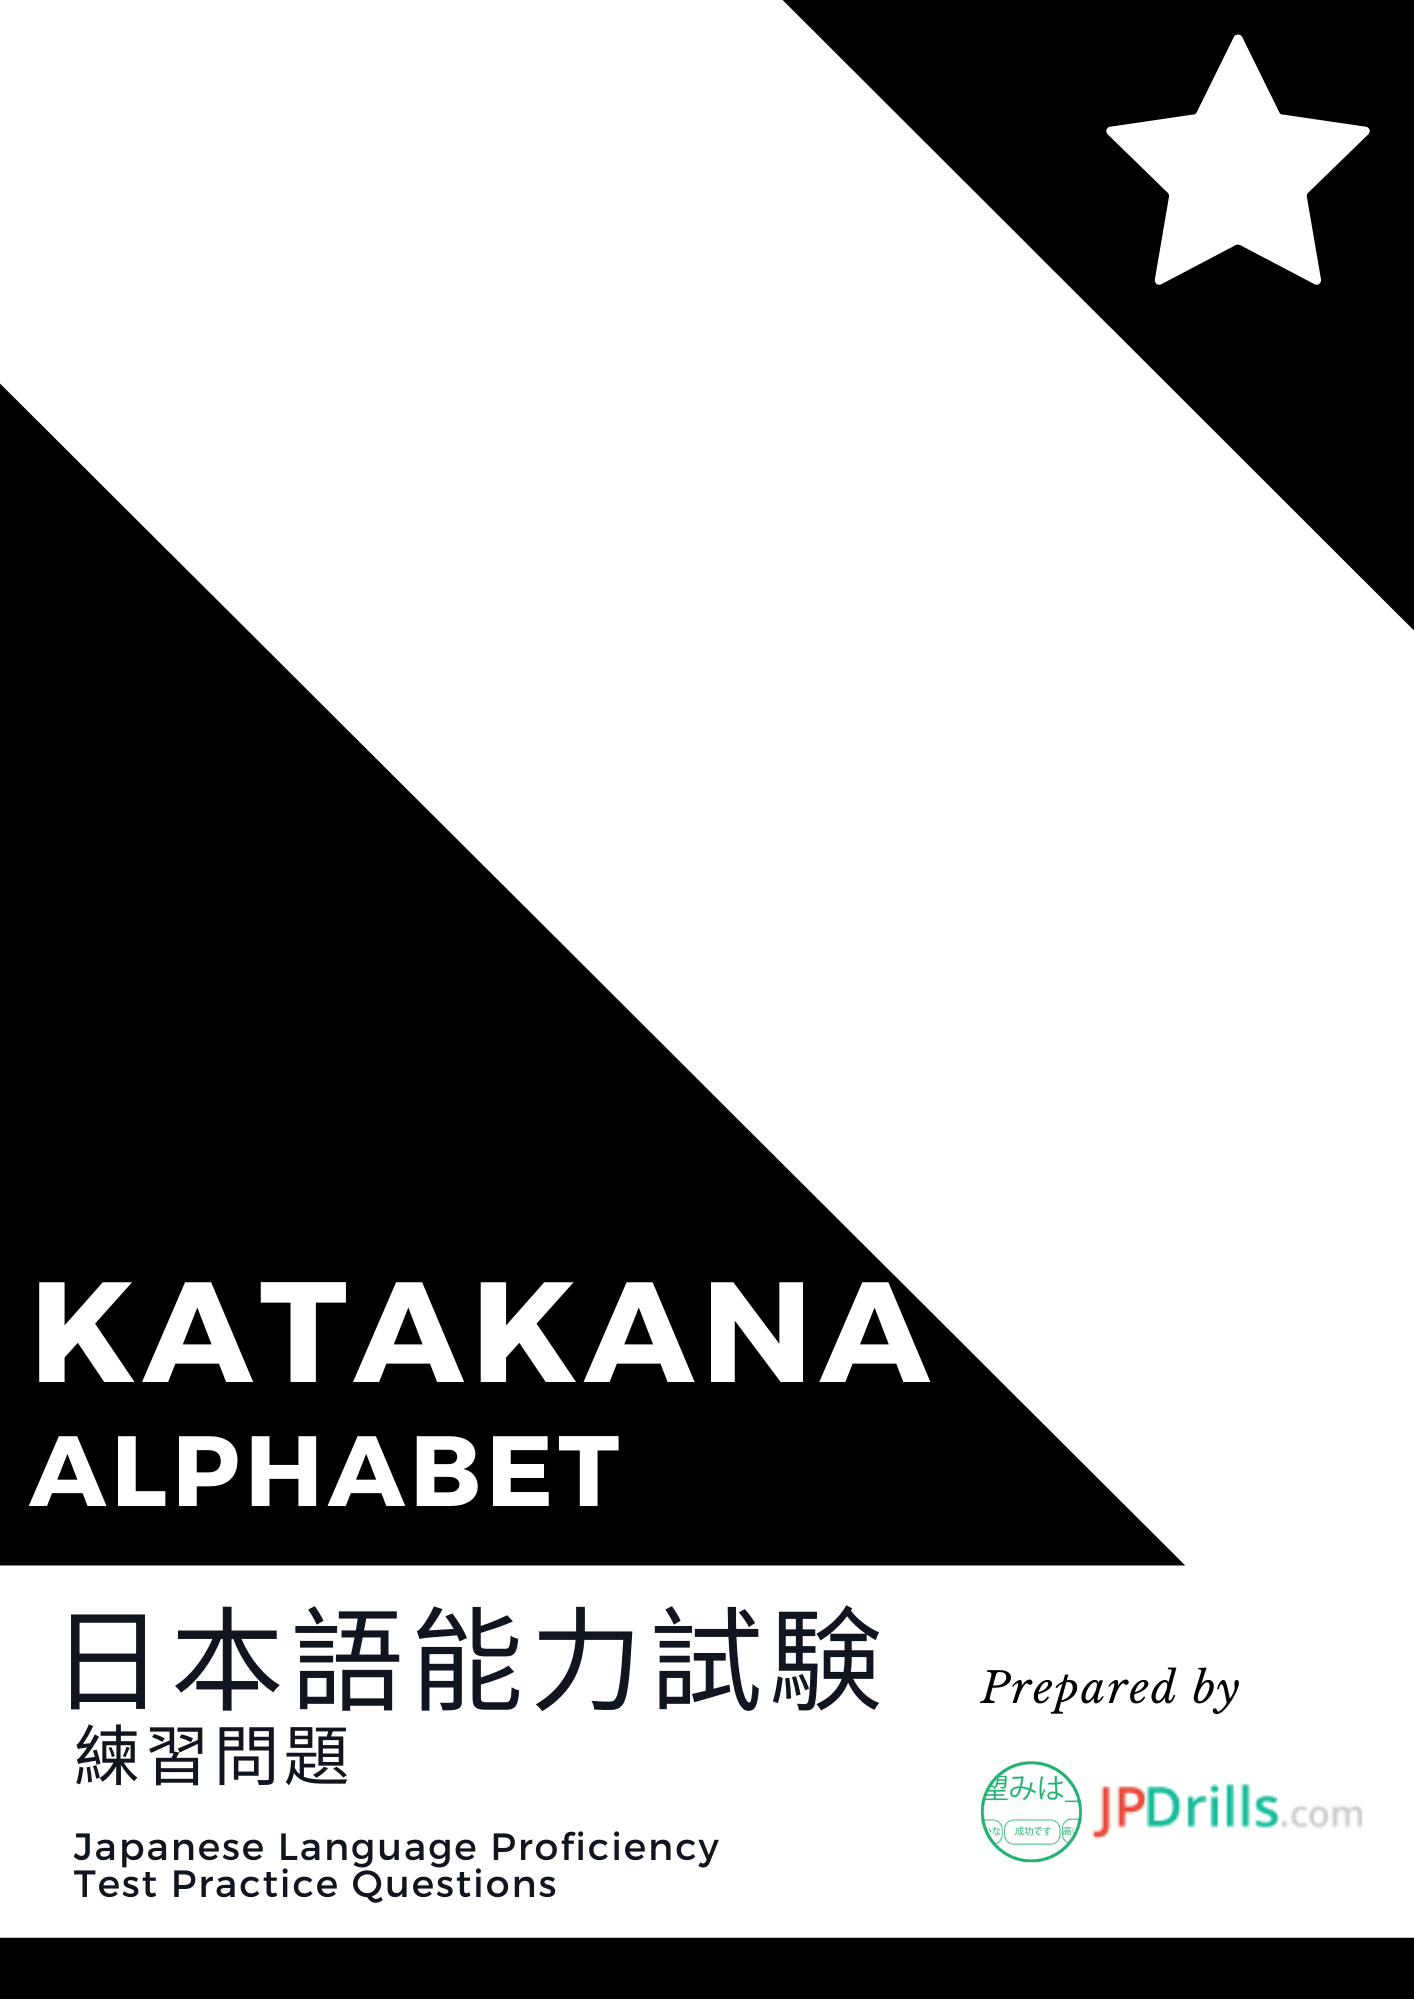 Katakana Japanese Alphabet quiz logo